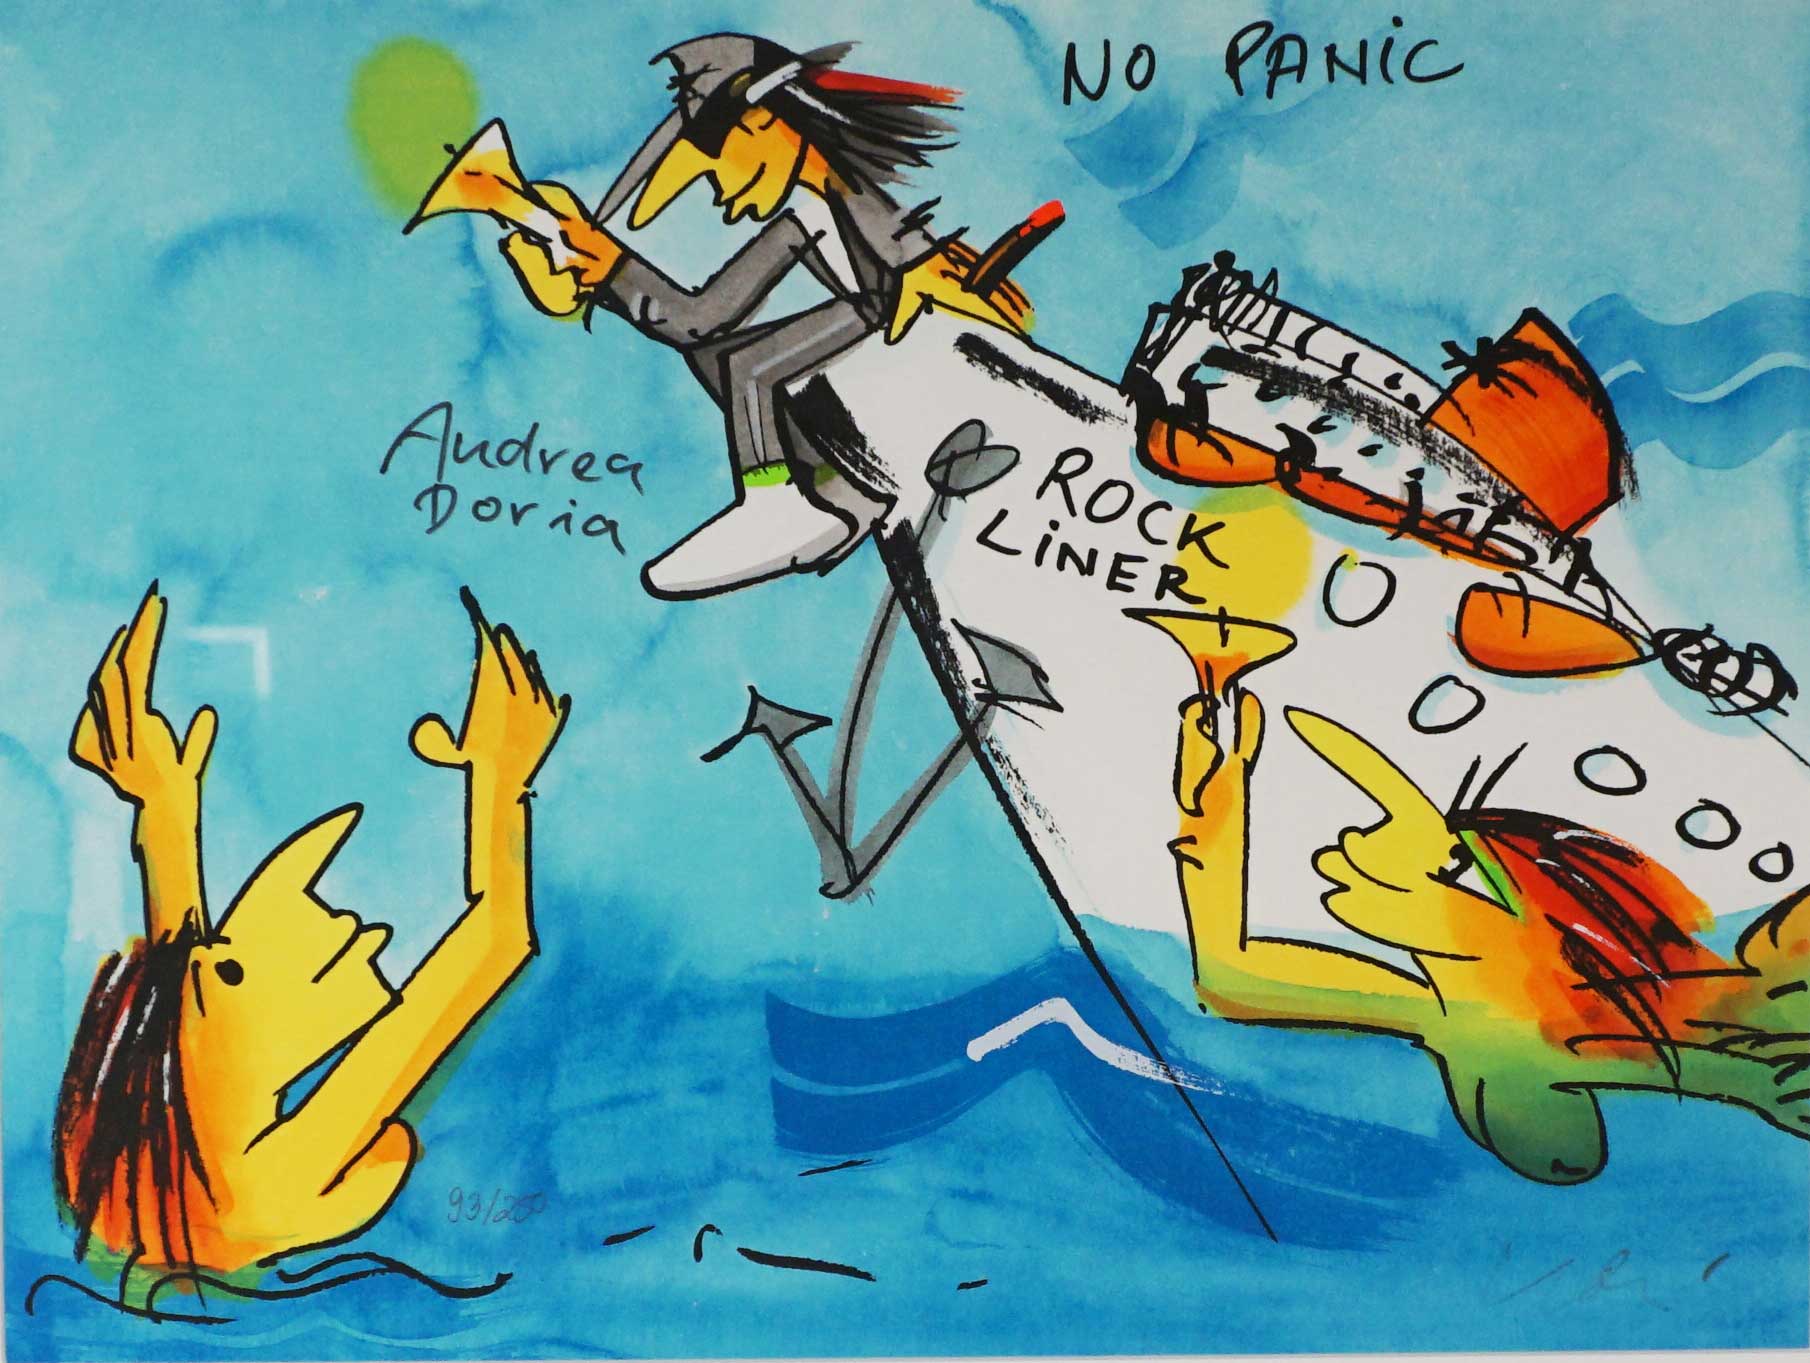 Udo Lindenberg "Rockliner No Panic!